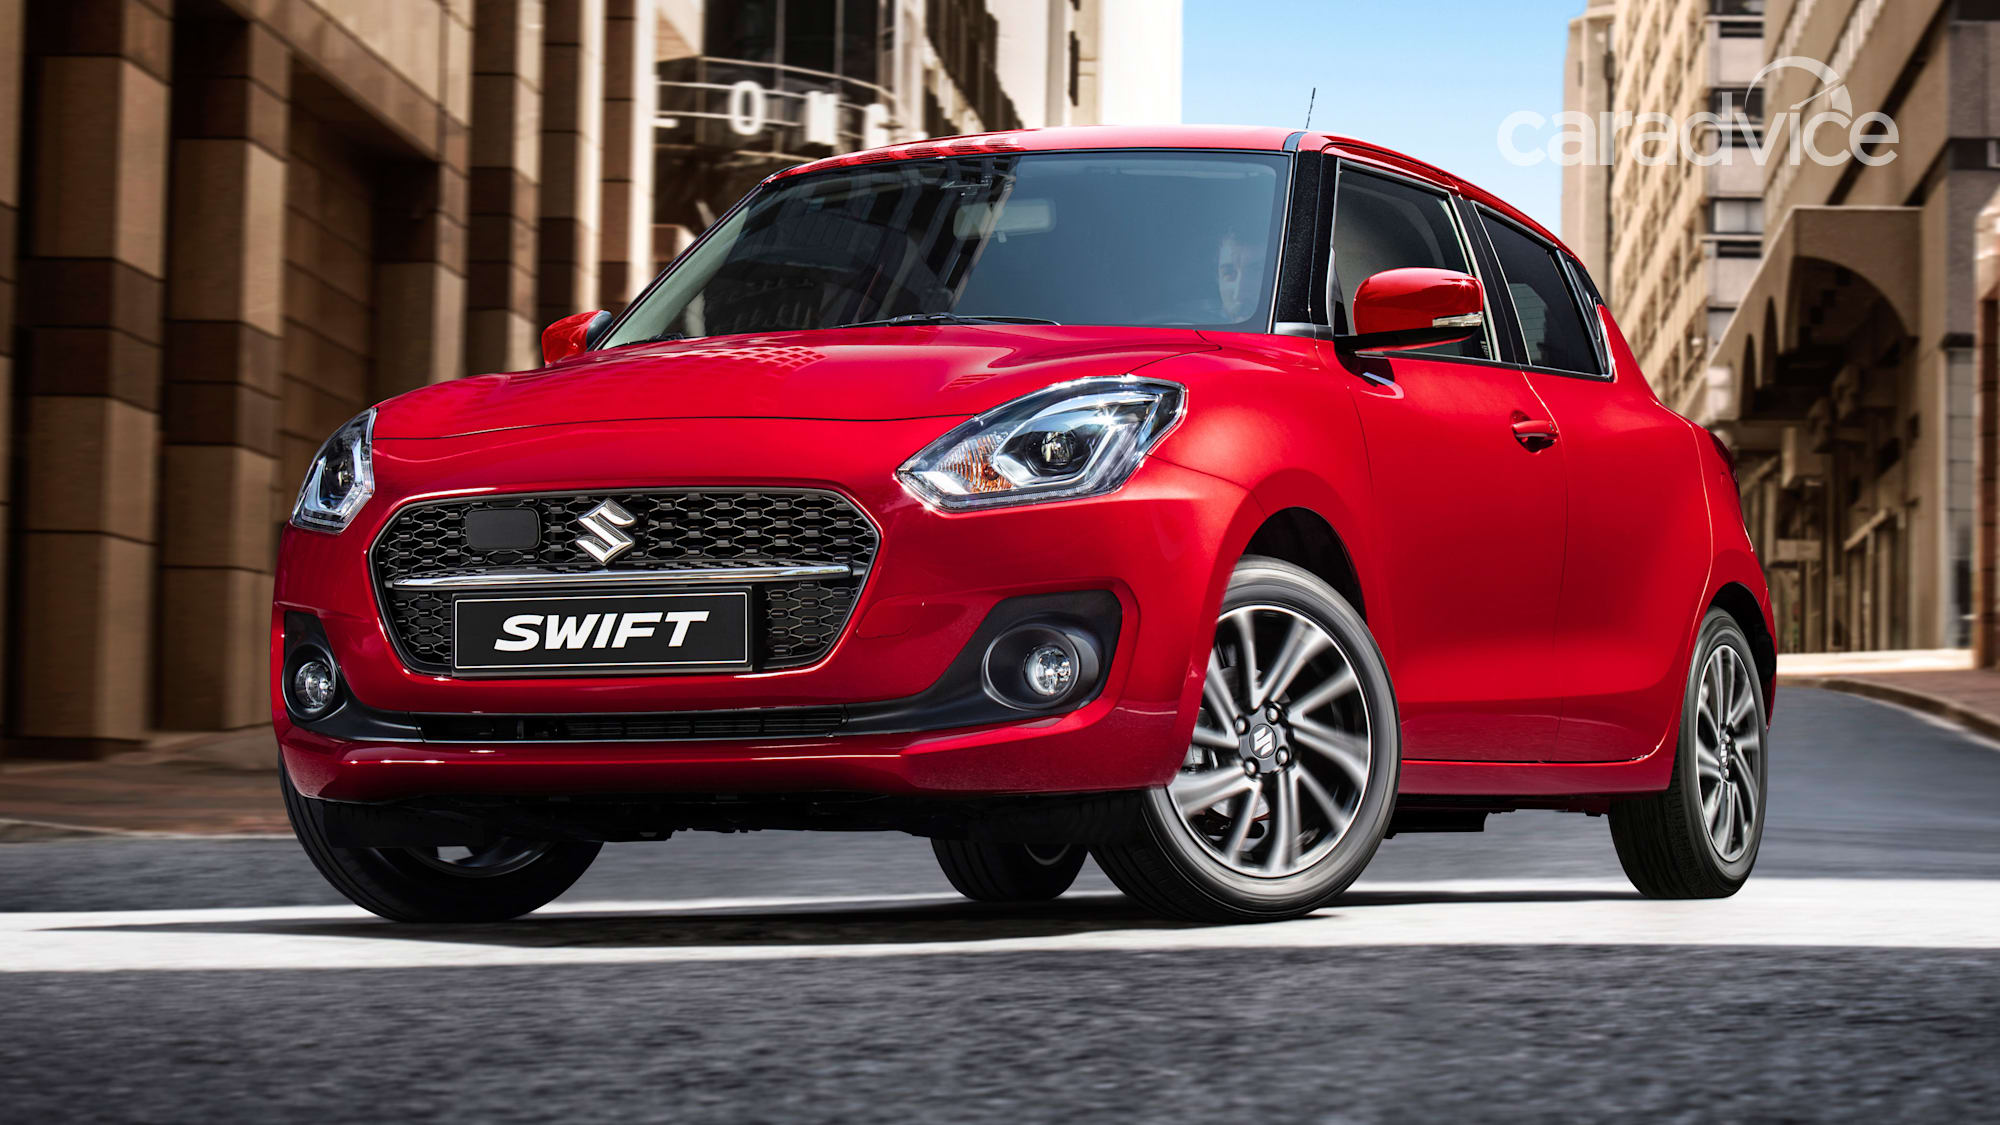 2022 Suzuki Swift in Australia from September CarAdvice